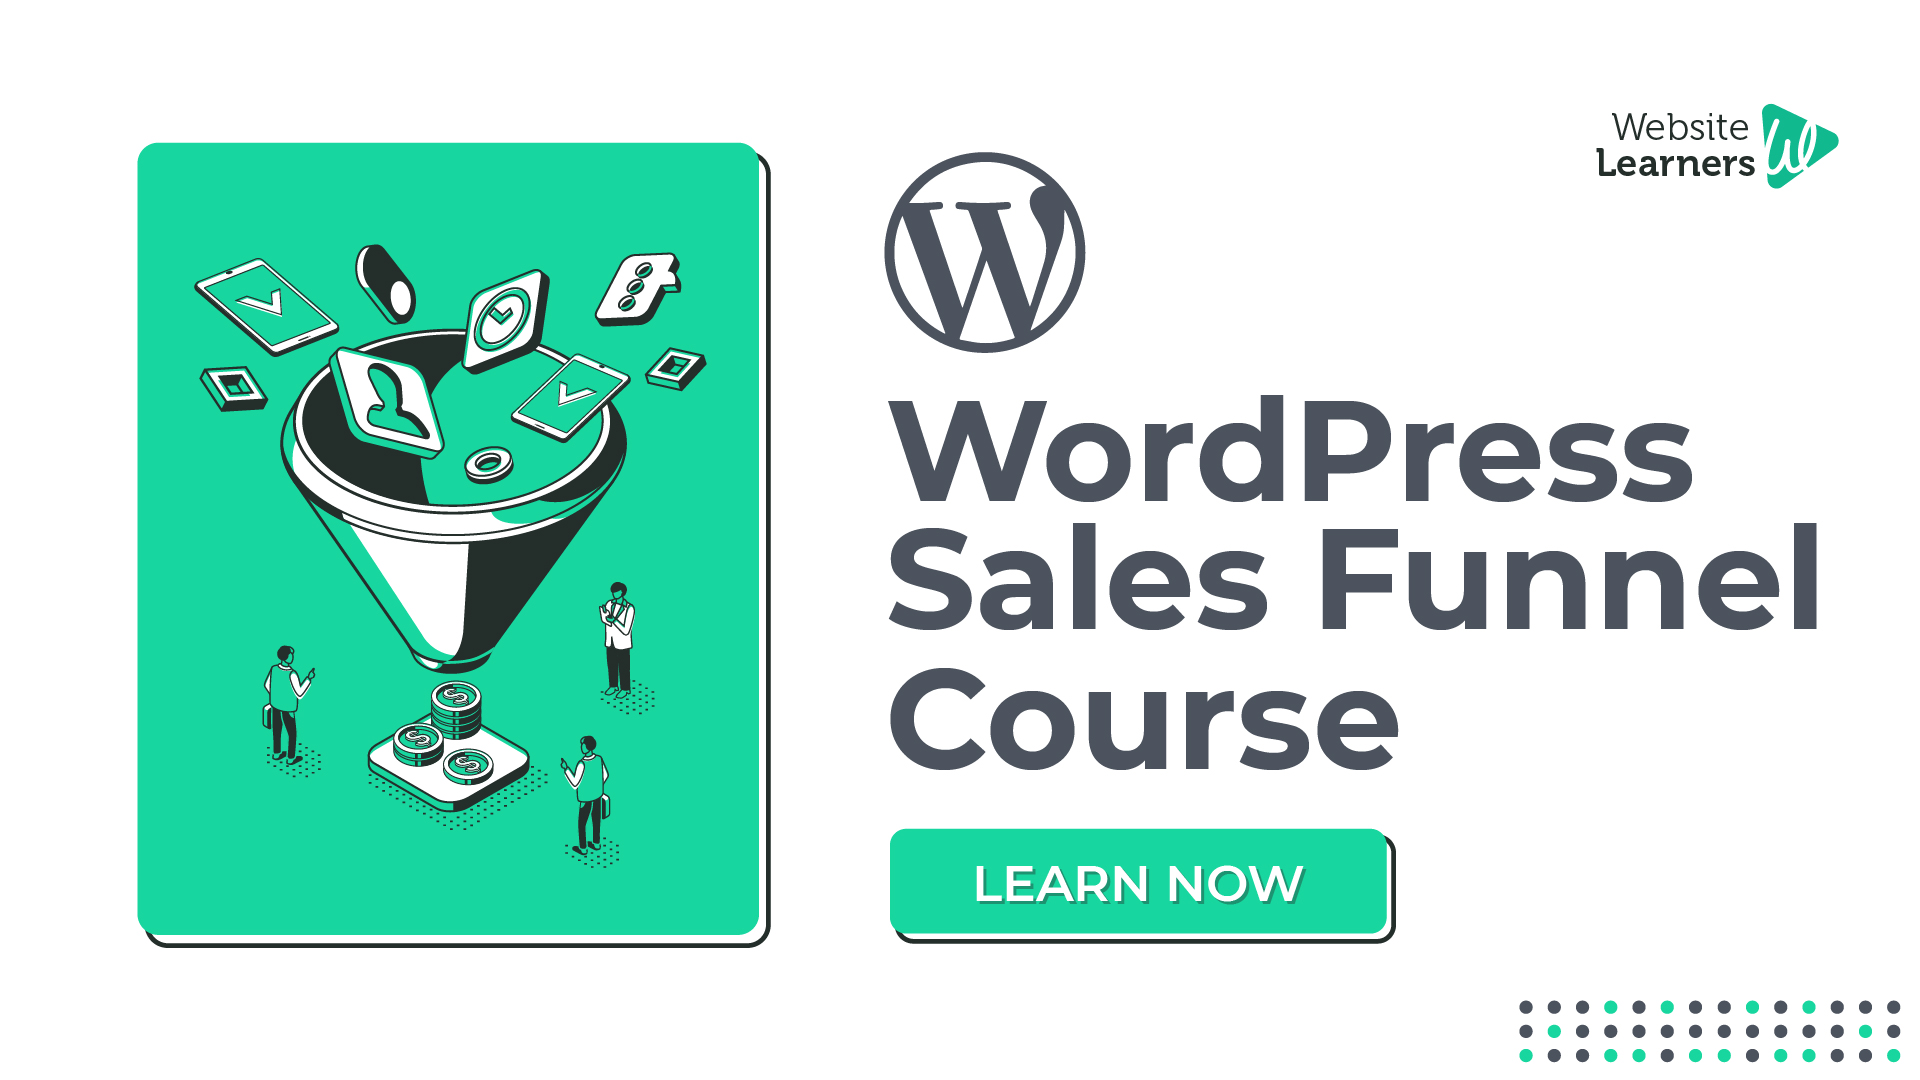 WordPress Sales Funnel Course